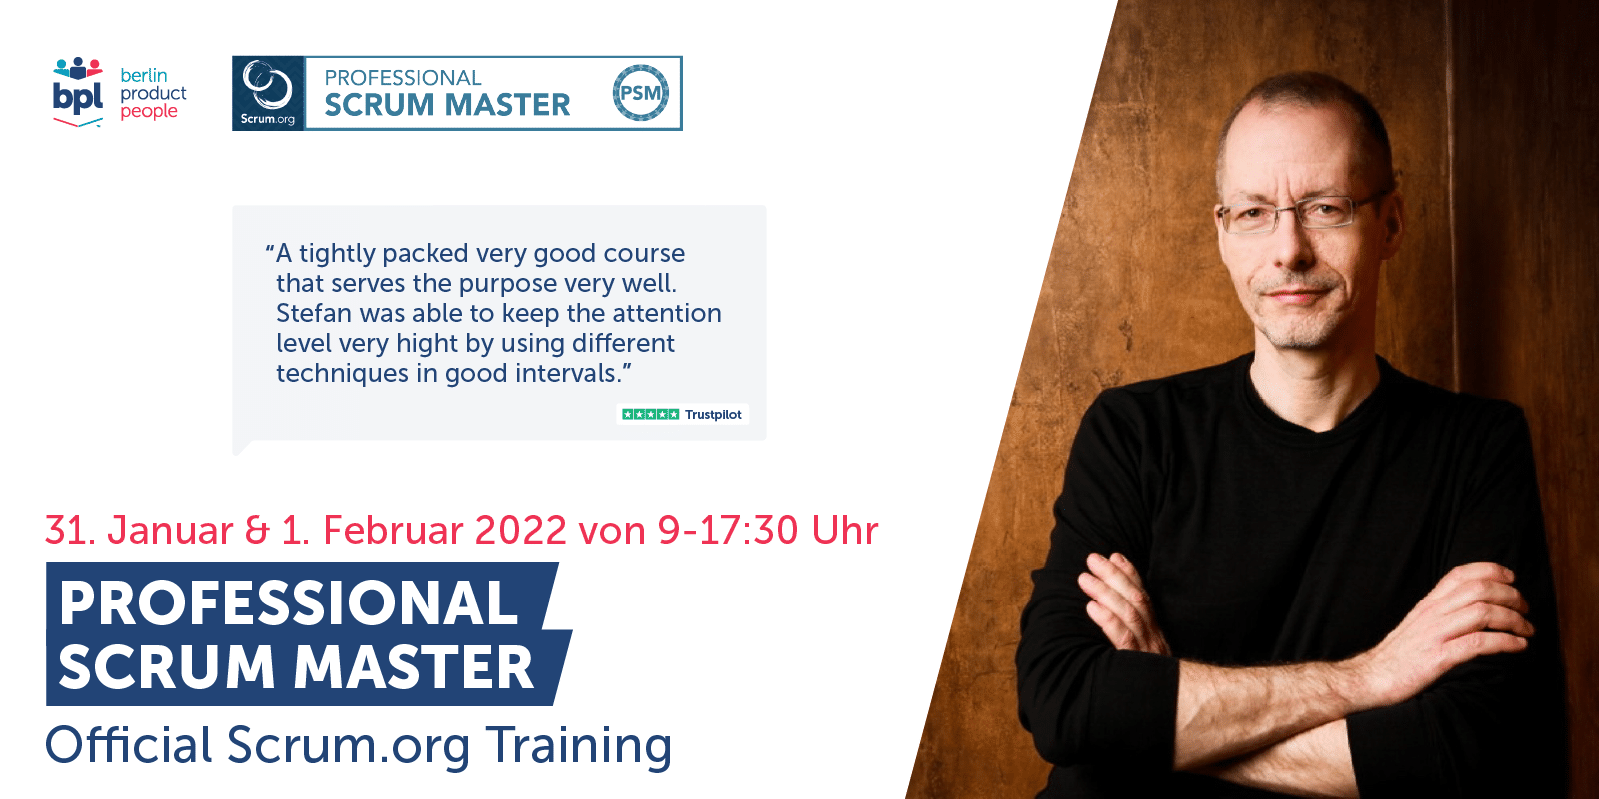 Professional Scrum Master Onlineschulung mit PSM I Zertifizierung — 31. Januar bis 1. Februar 2022 — Berlin Product People GmbH